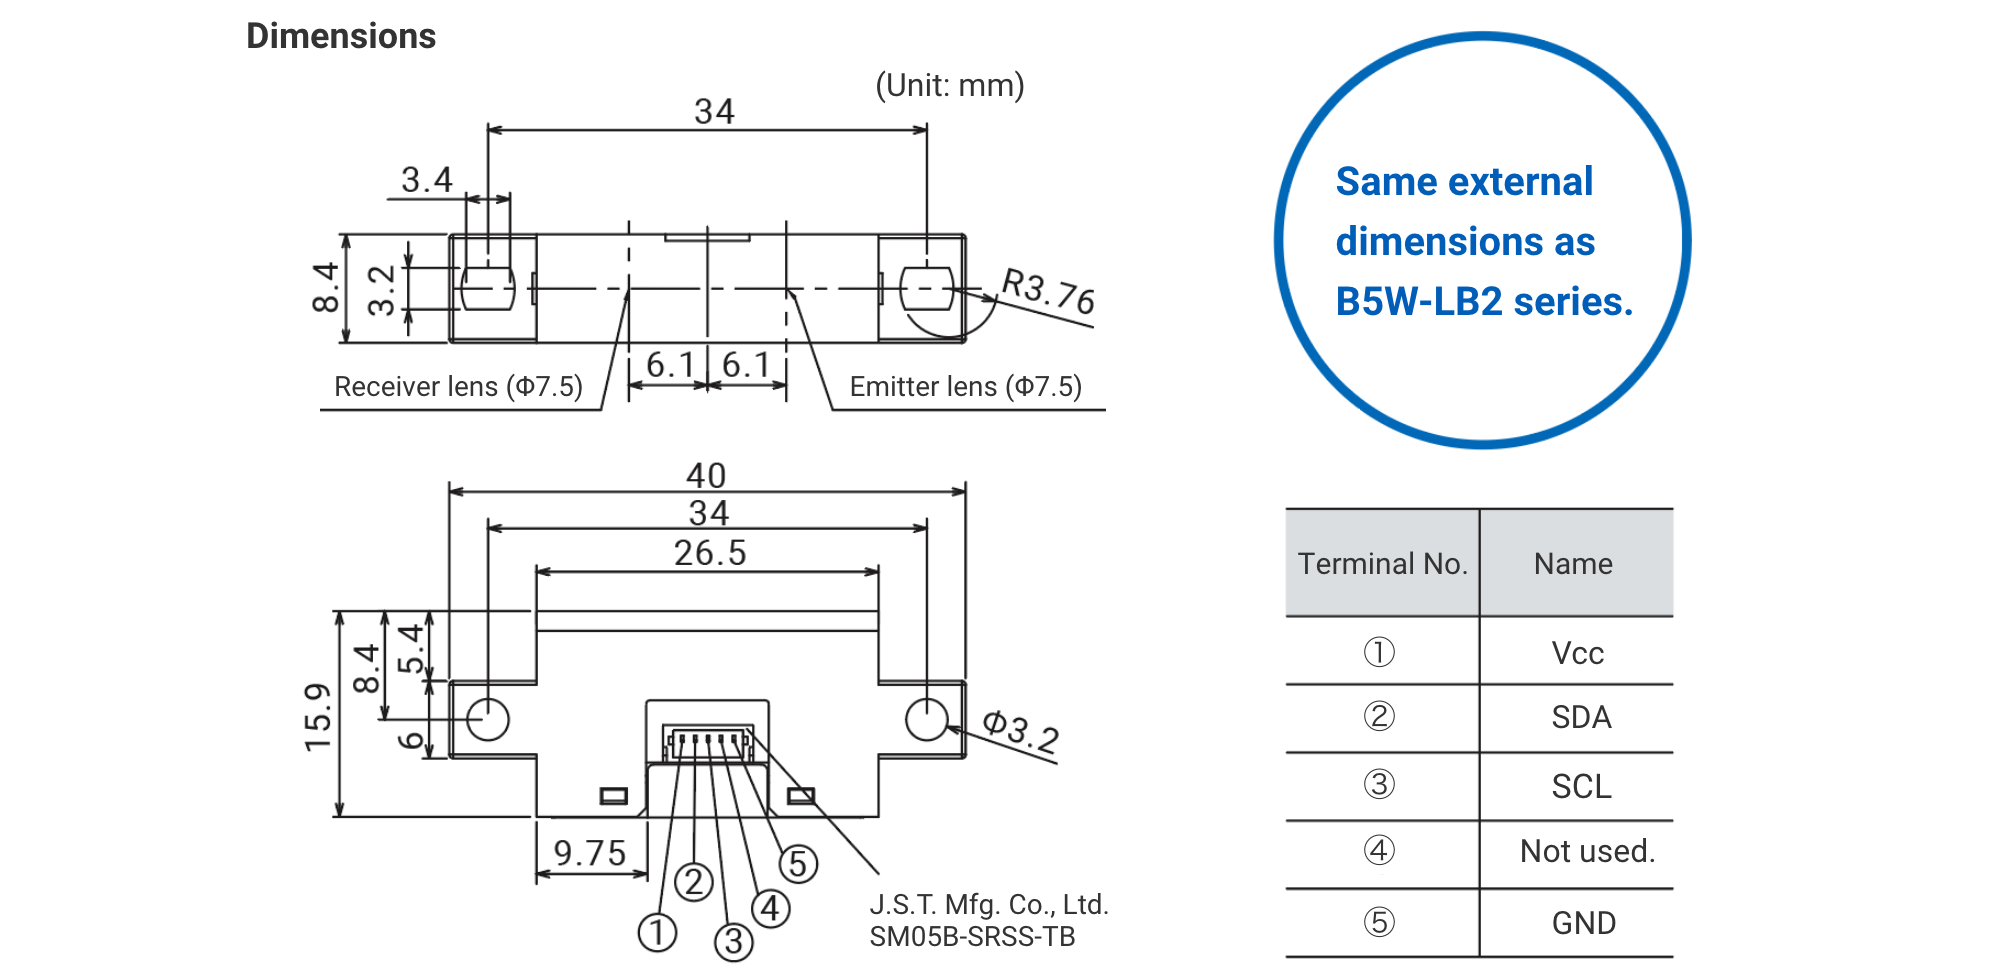 Same external dimensions as B5W-LB2 series.